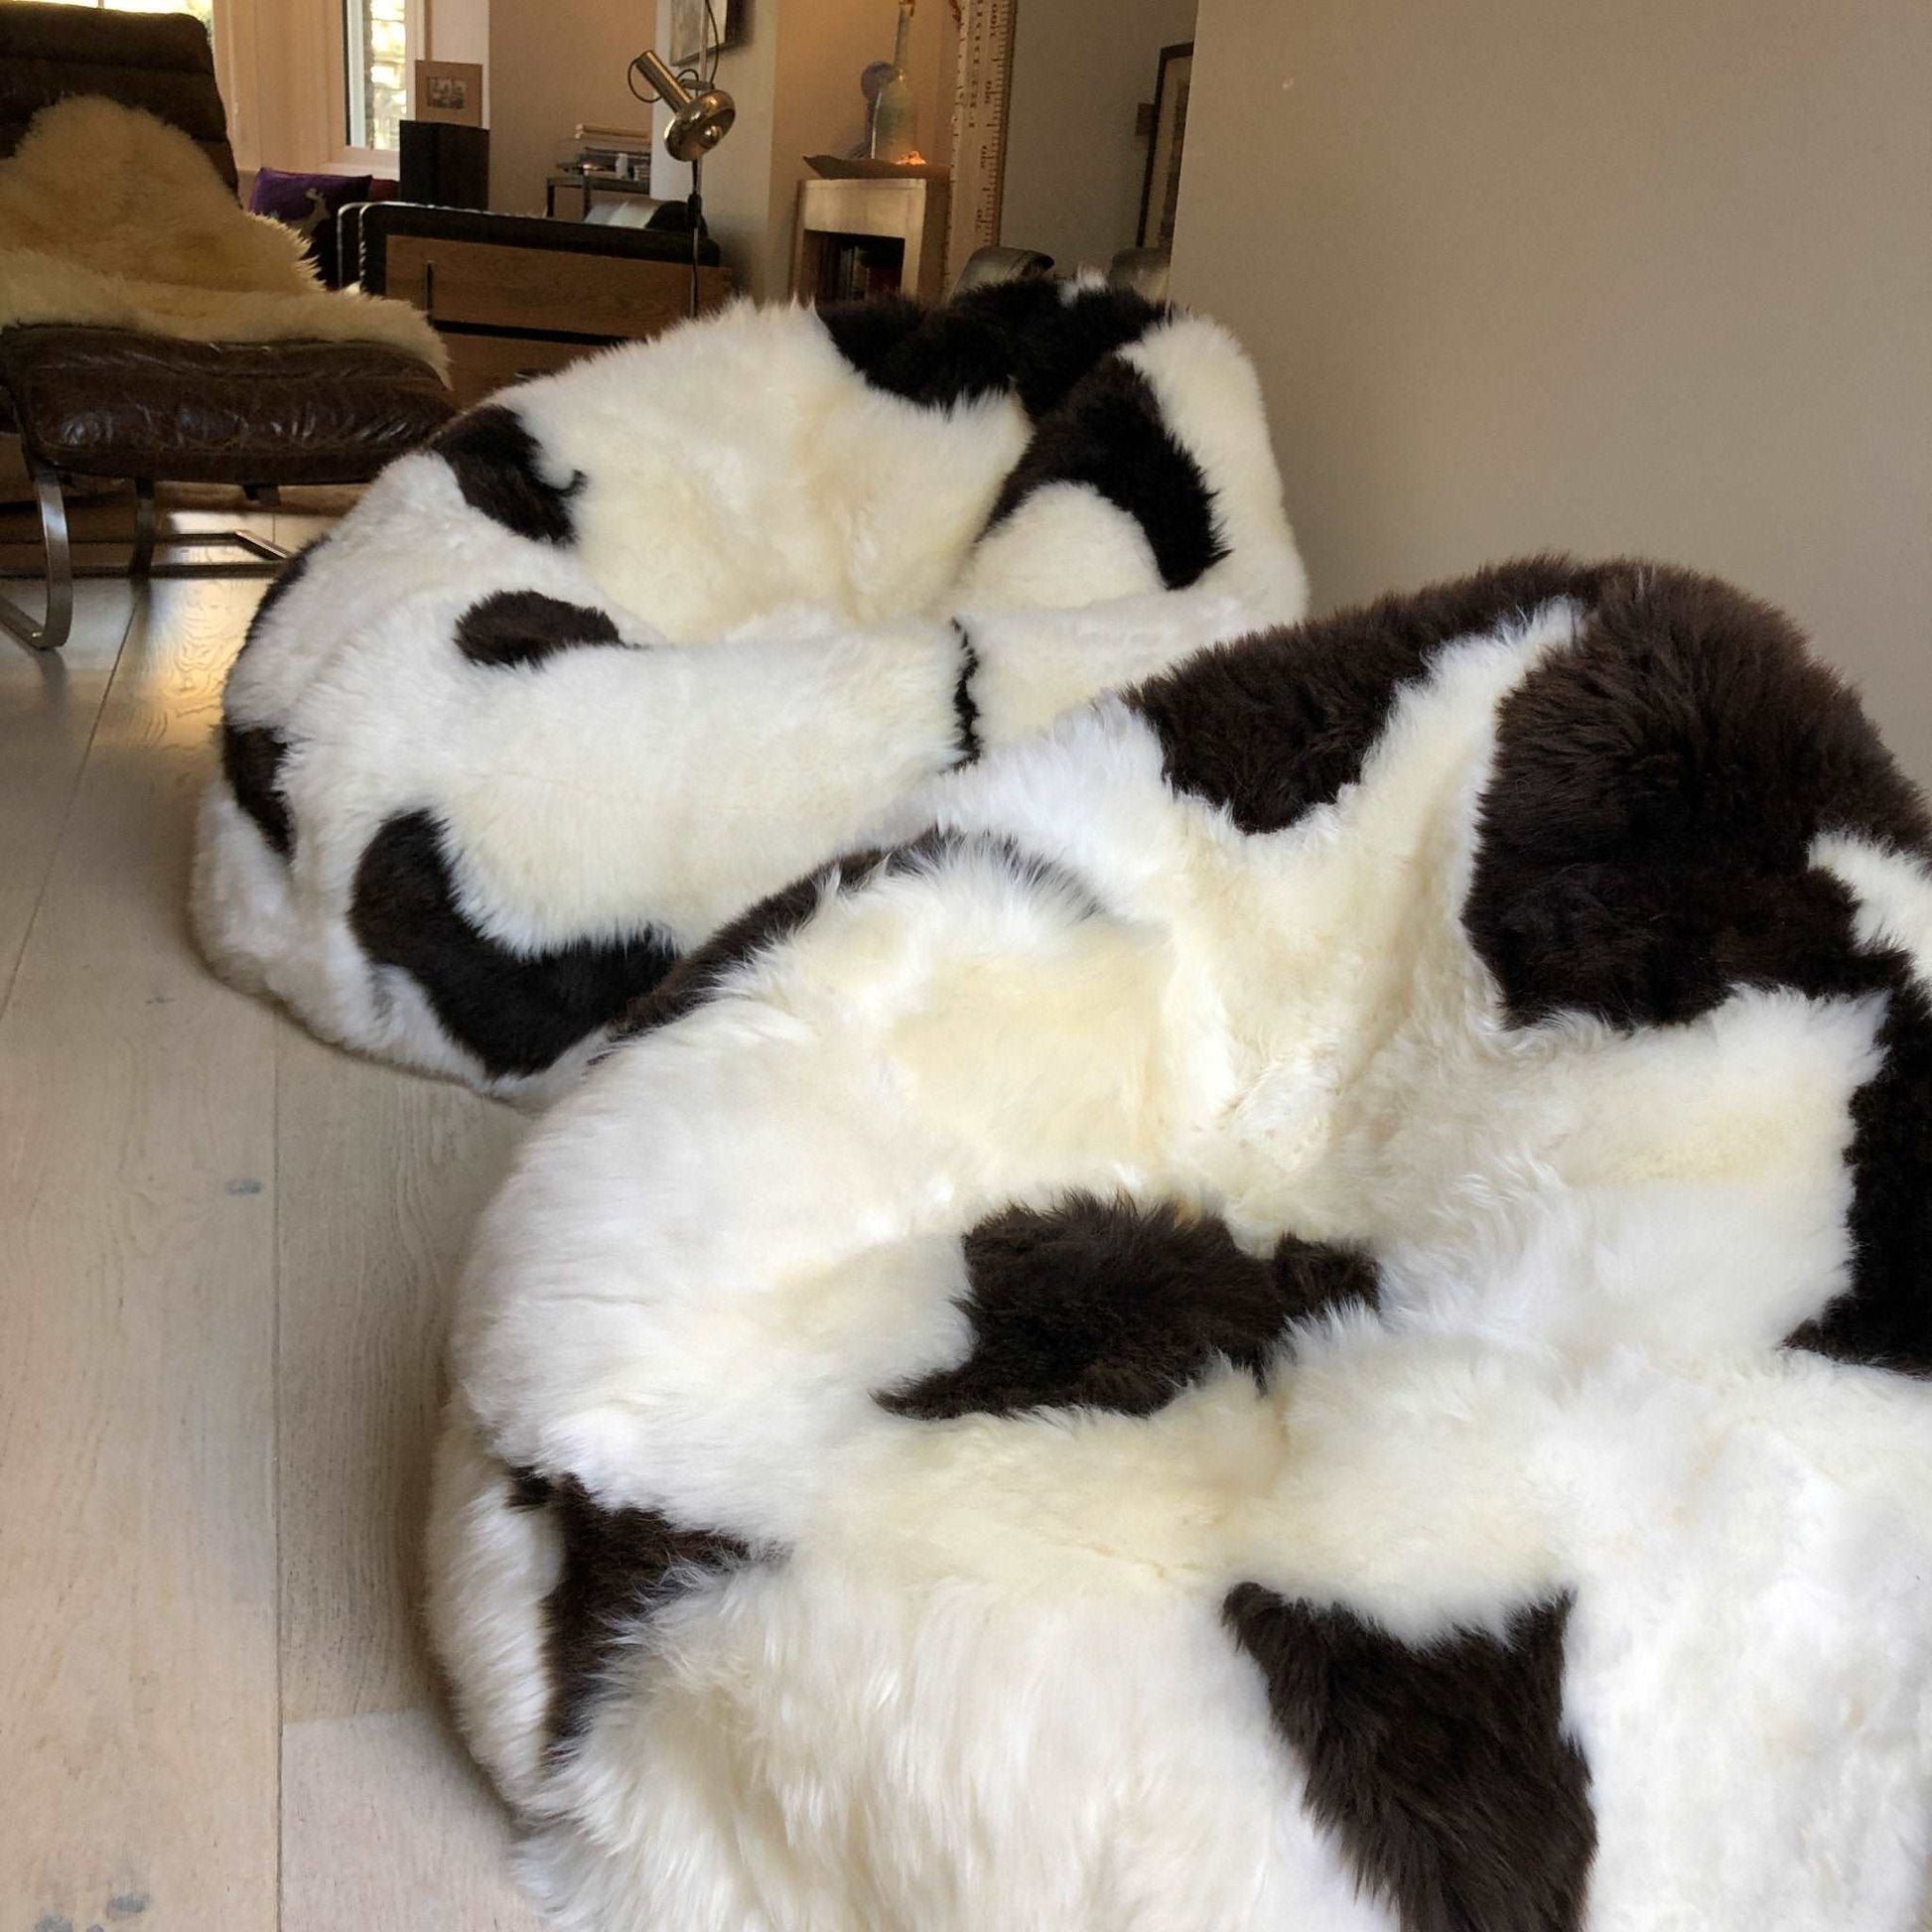 100% Natural British White & Brown Spotted Sheepskin Beanbag Chair - Large - Wildash London